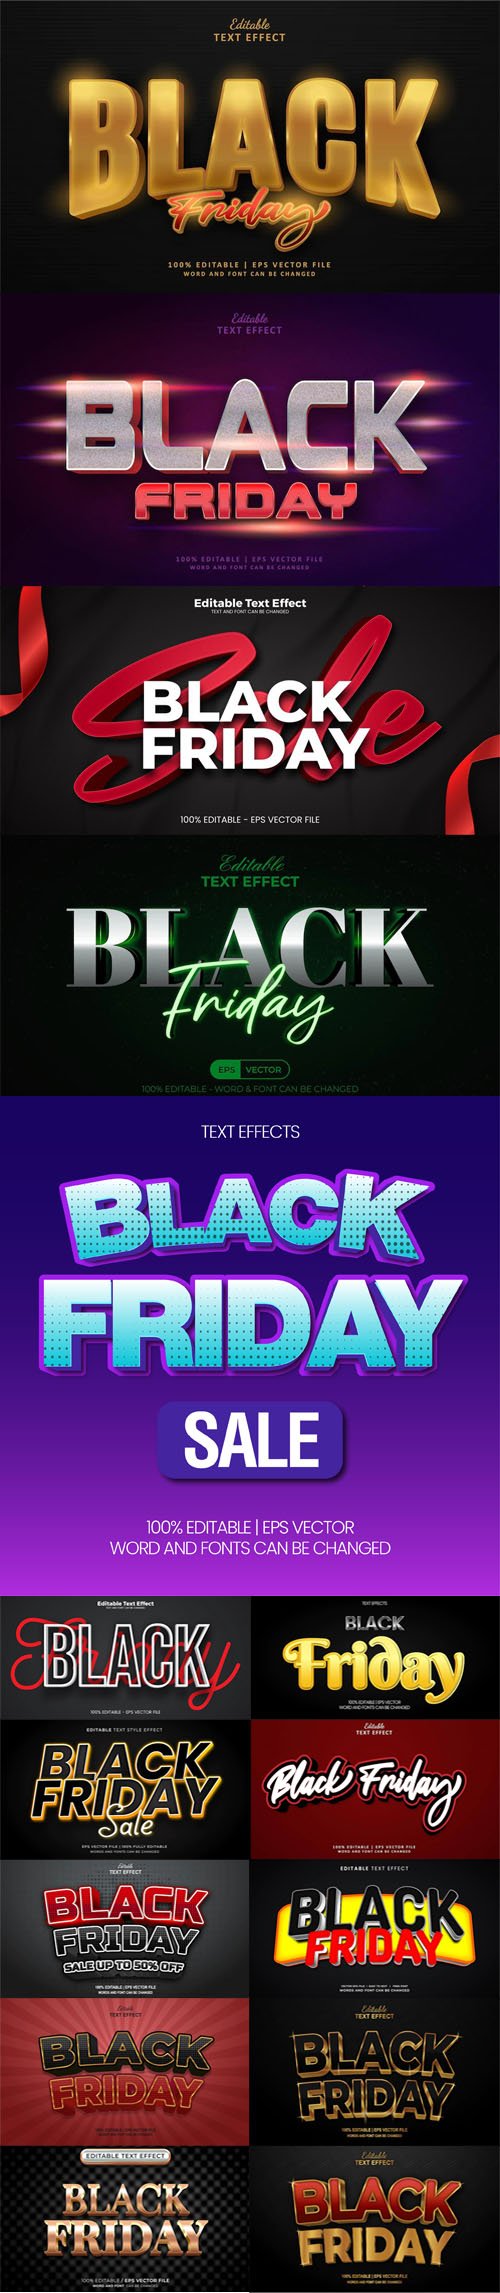 15 Modern Black Friday 3D Text Effects Vector Templates [Vol.3]